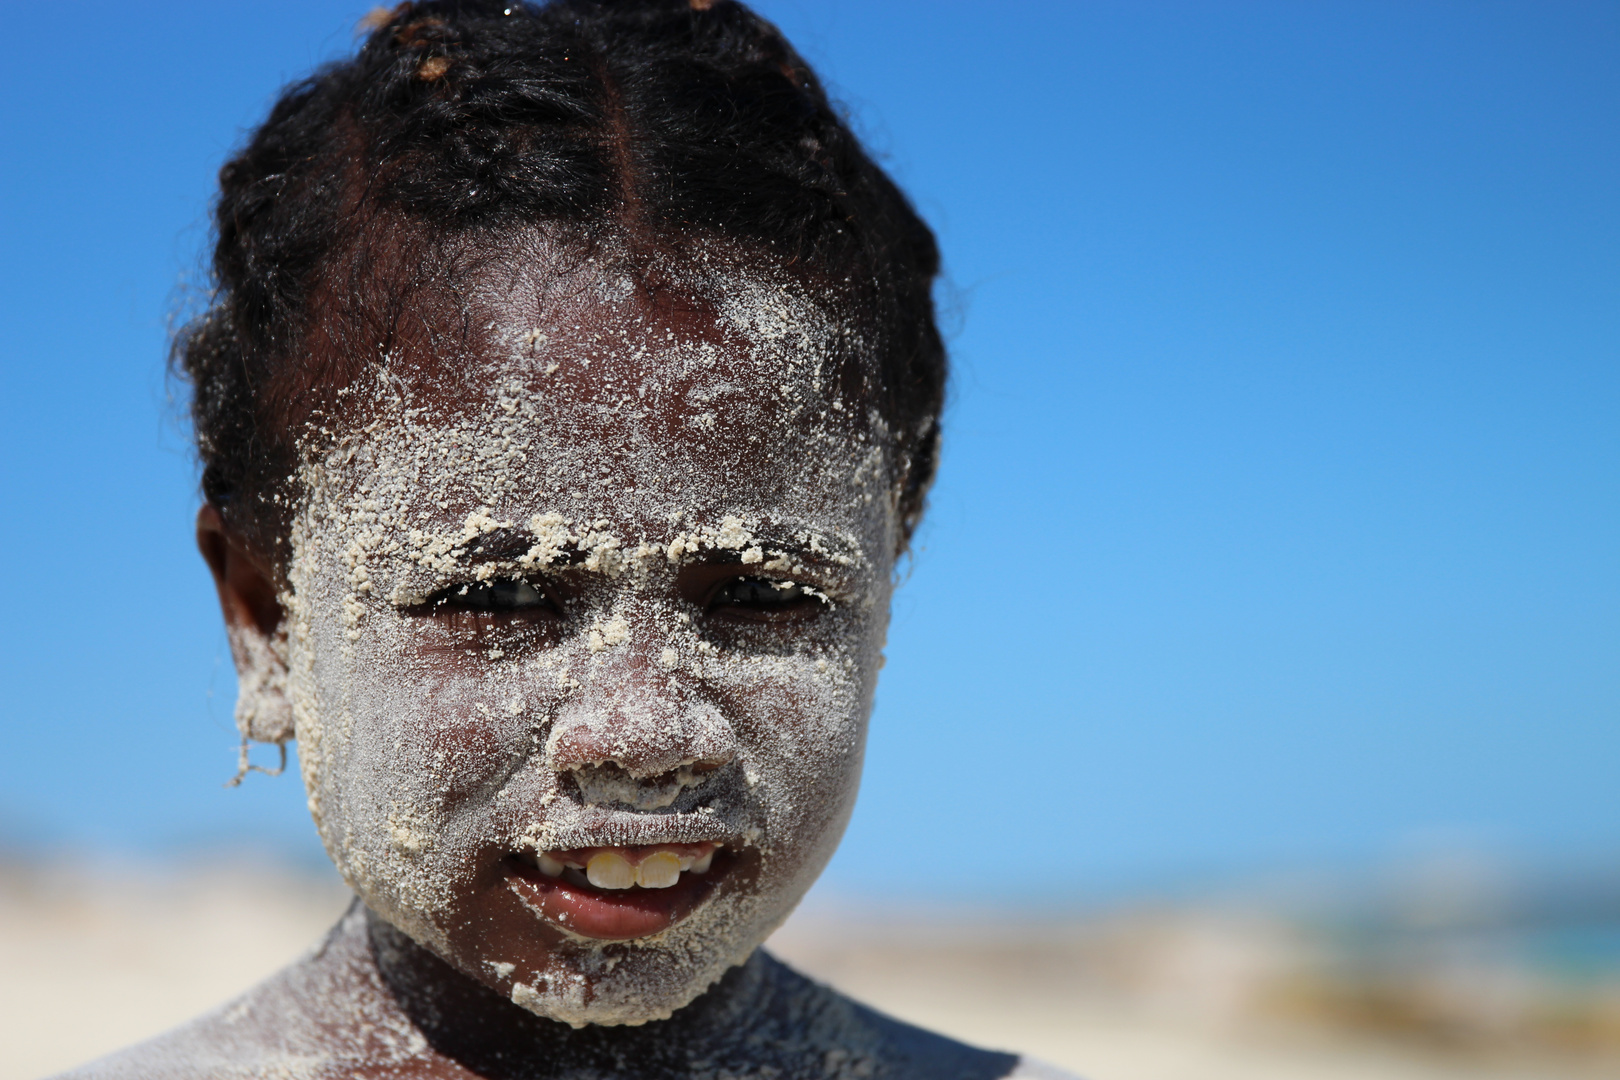 Porträt: Gesichter Madagaskars (05)